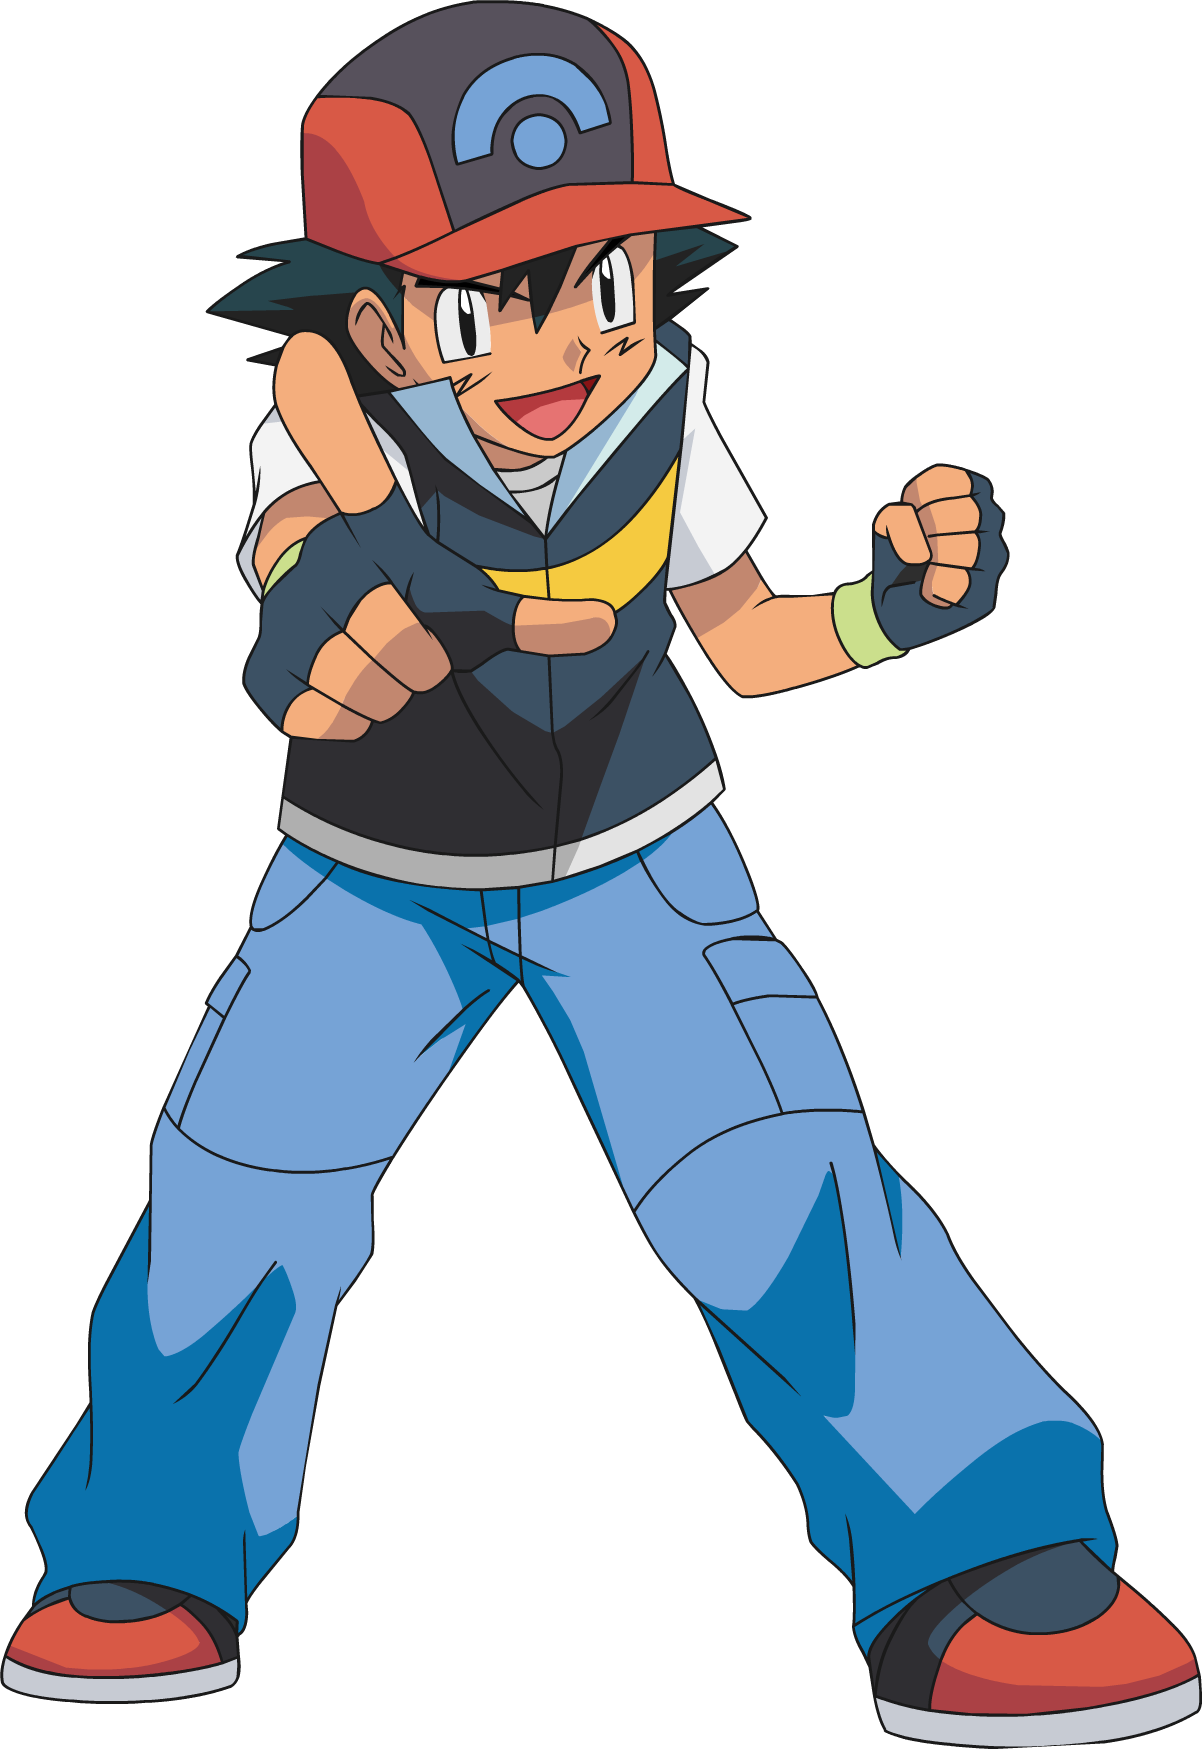 Ash Ketchum Character Profile Wikia Fandom Powered By